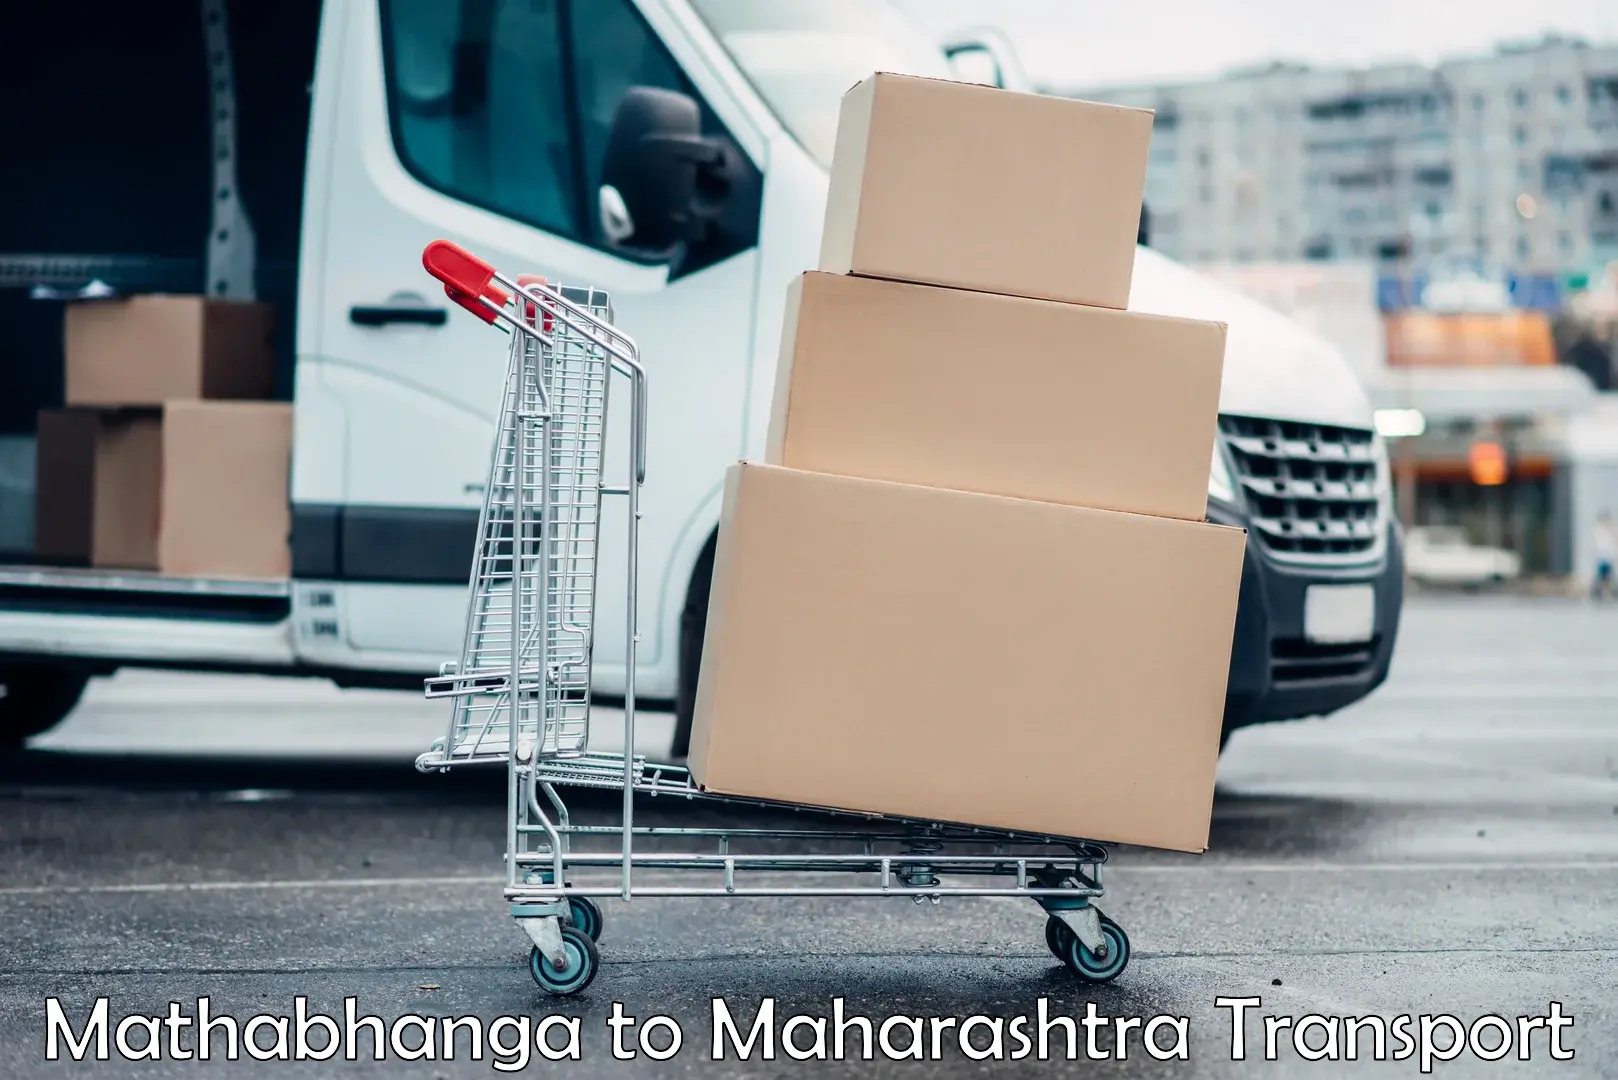 Truck transport companies in India Mathabhanga to Jamkhed